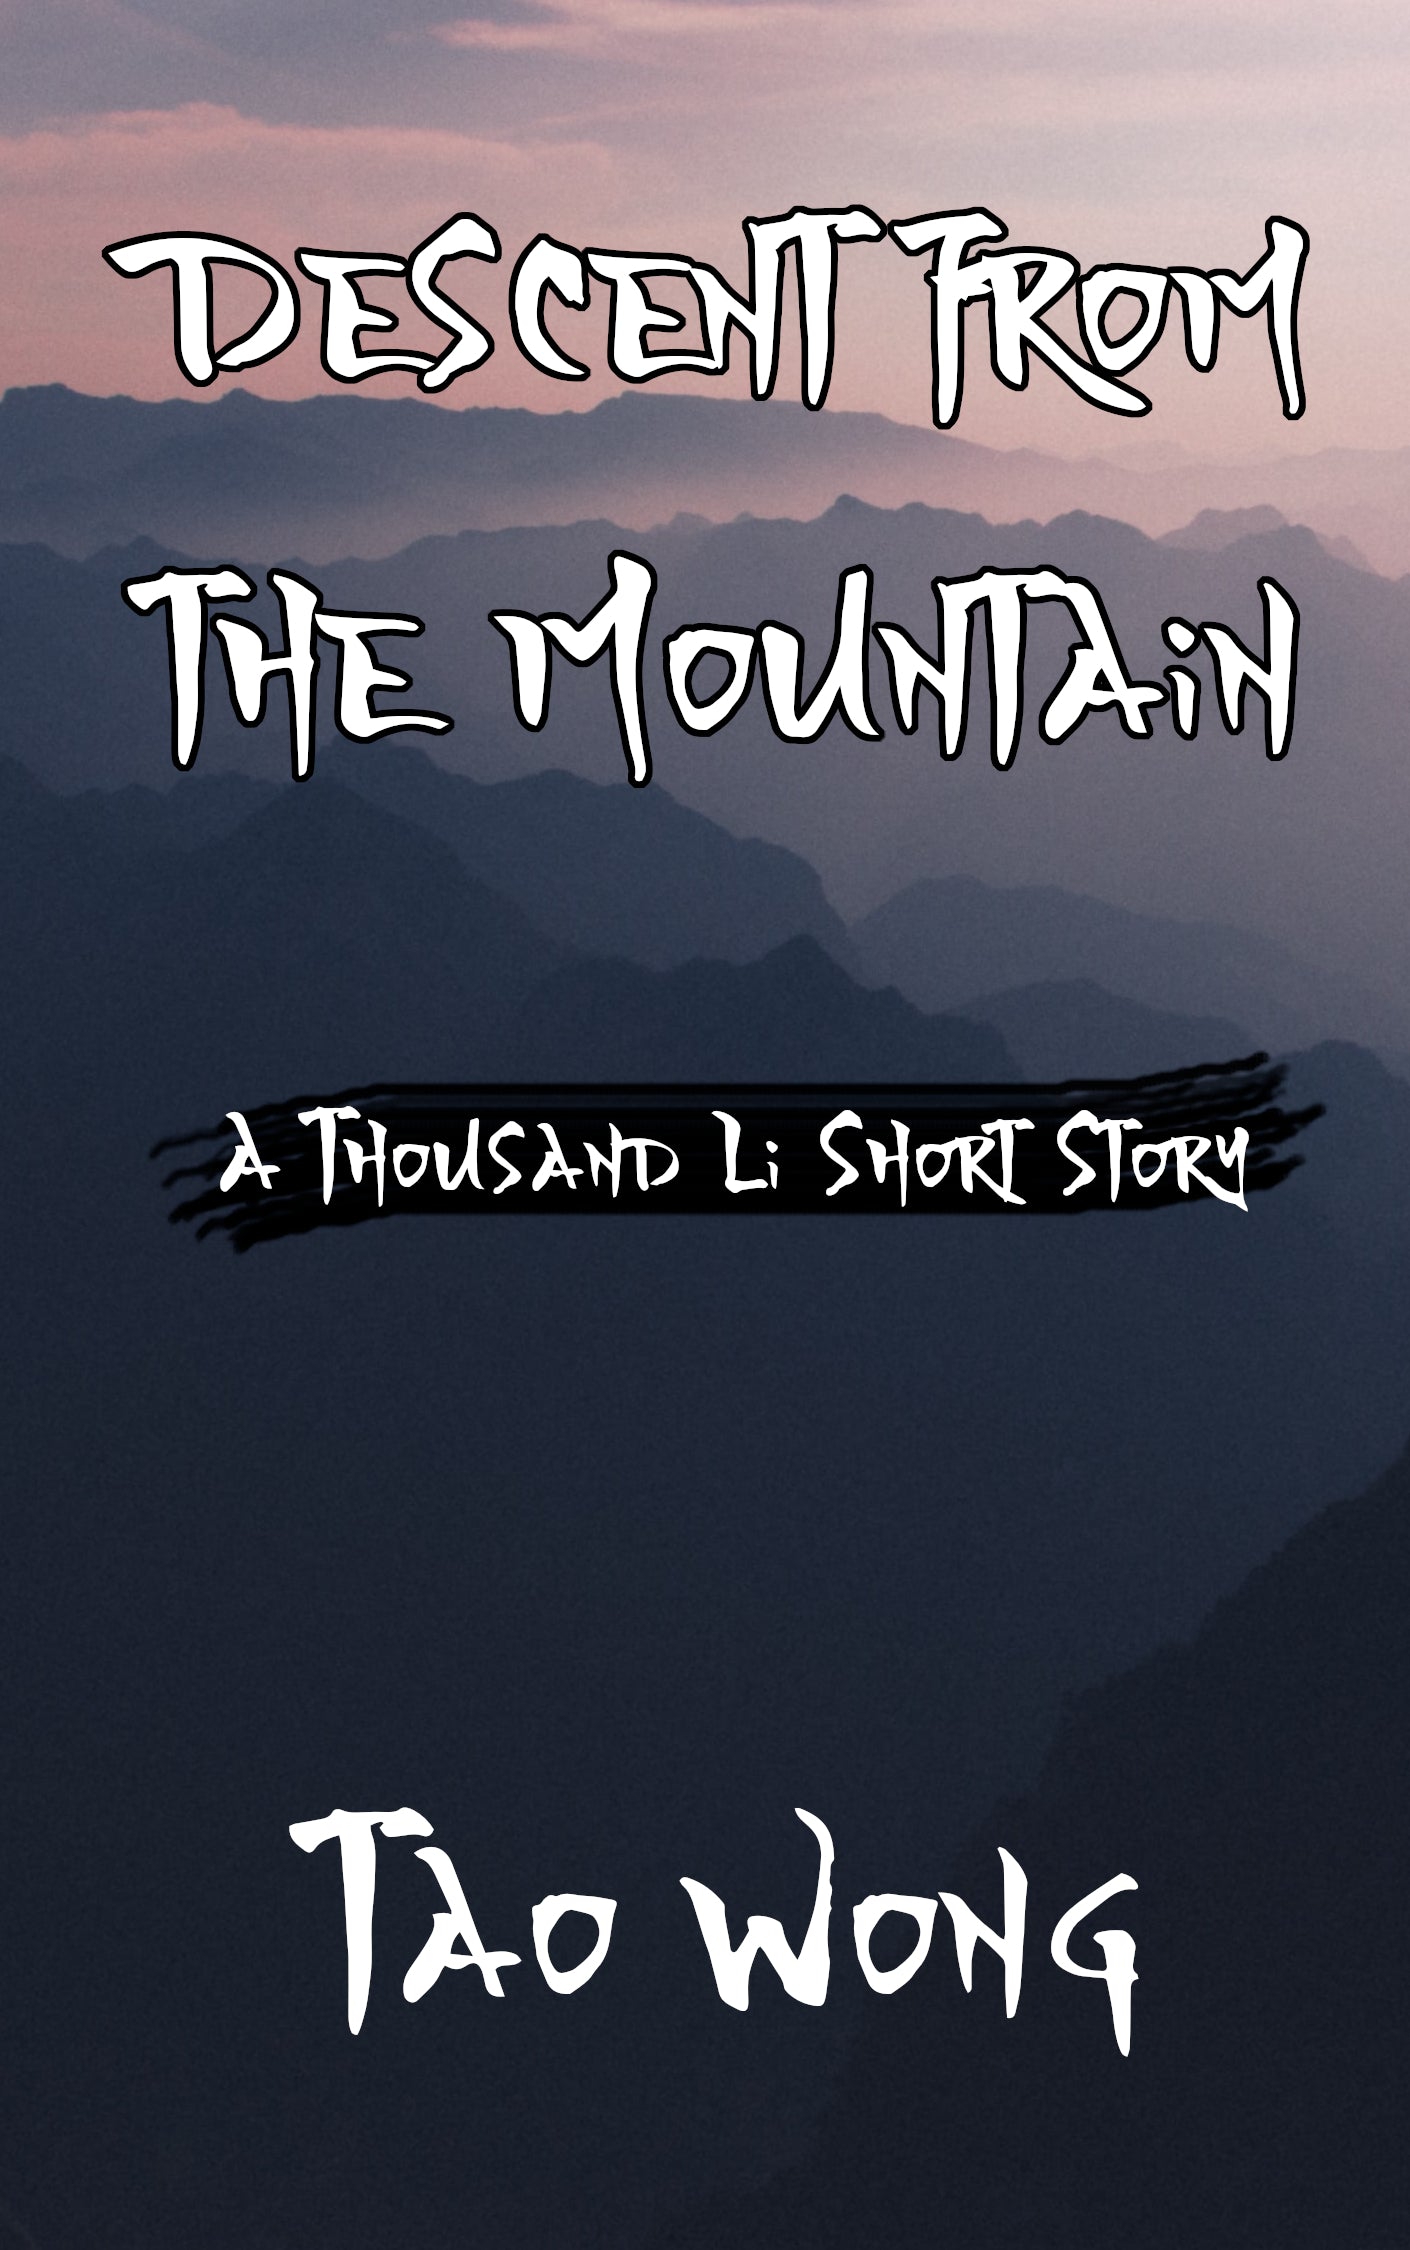 Descent from the Mountain (An A Thousand Li Short Story)